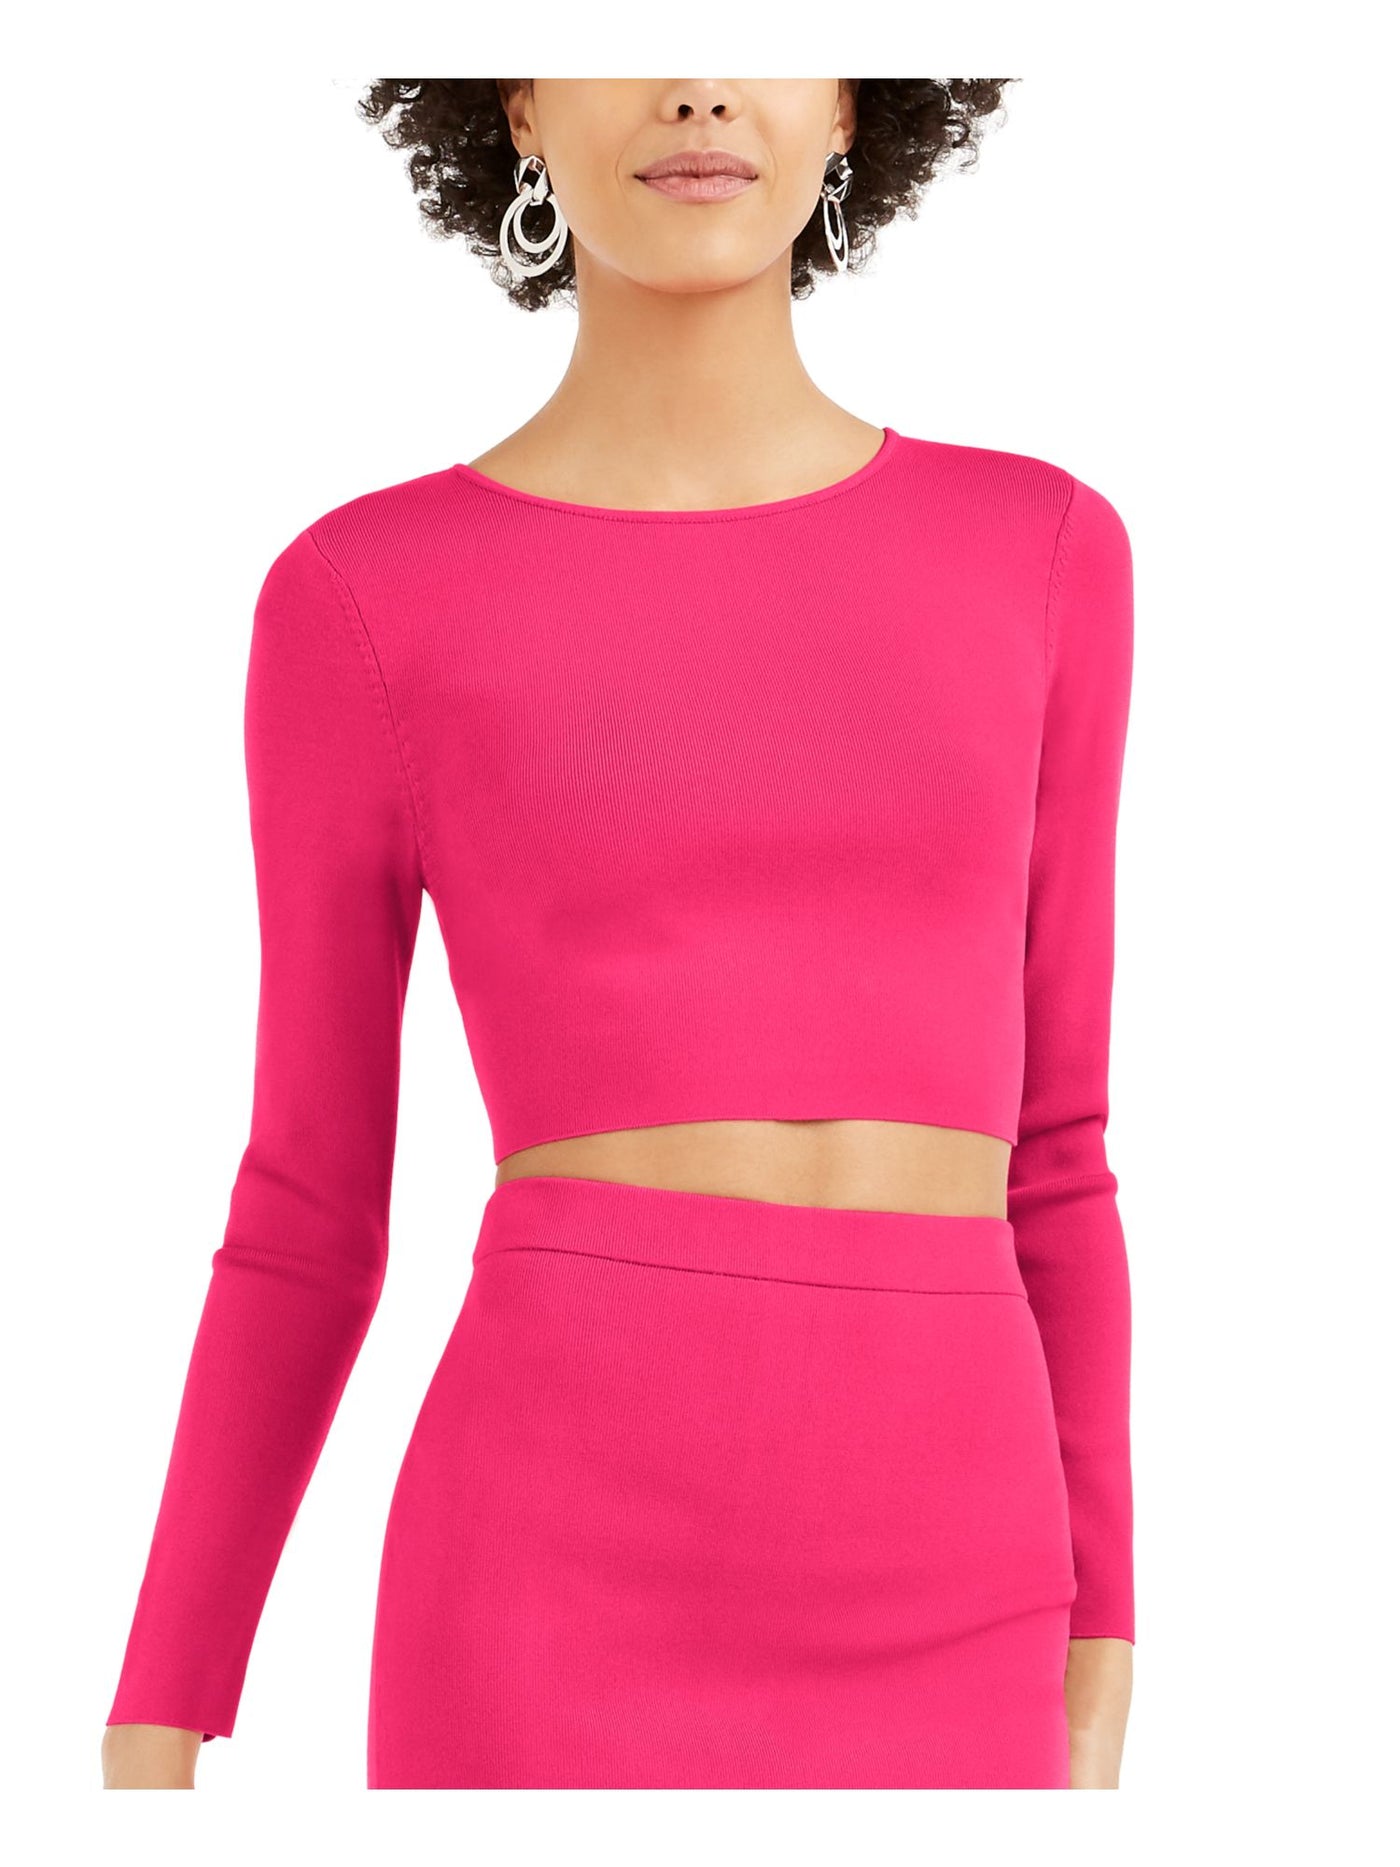 BAR III Womens Pink Long Sleeve Crew Neck Crop Top Sweater M